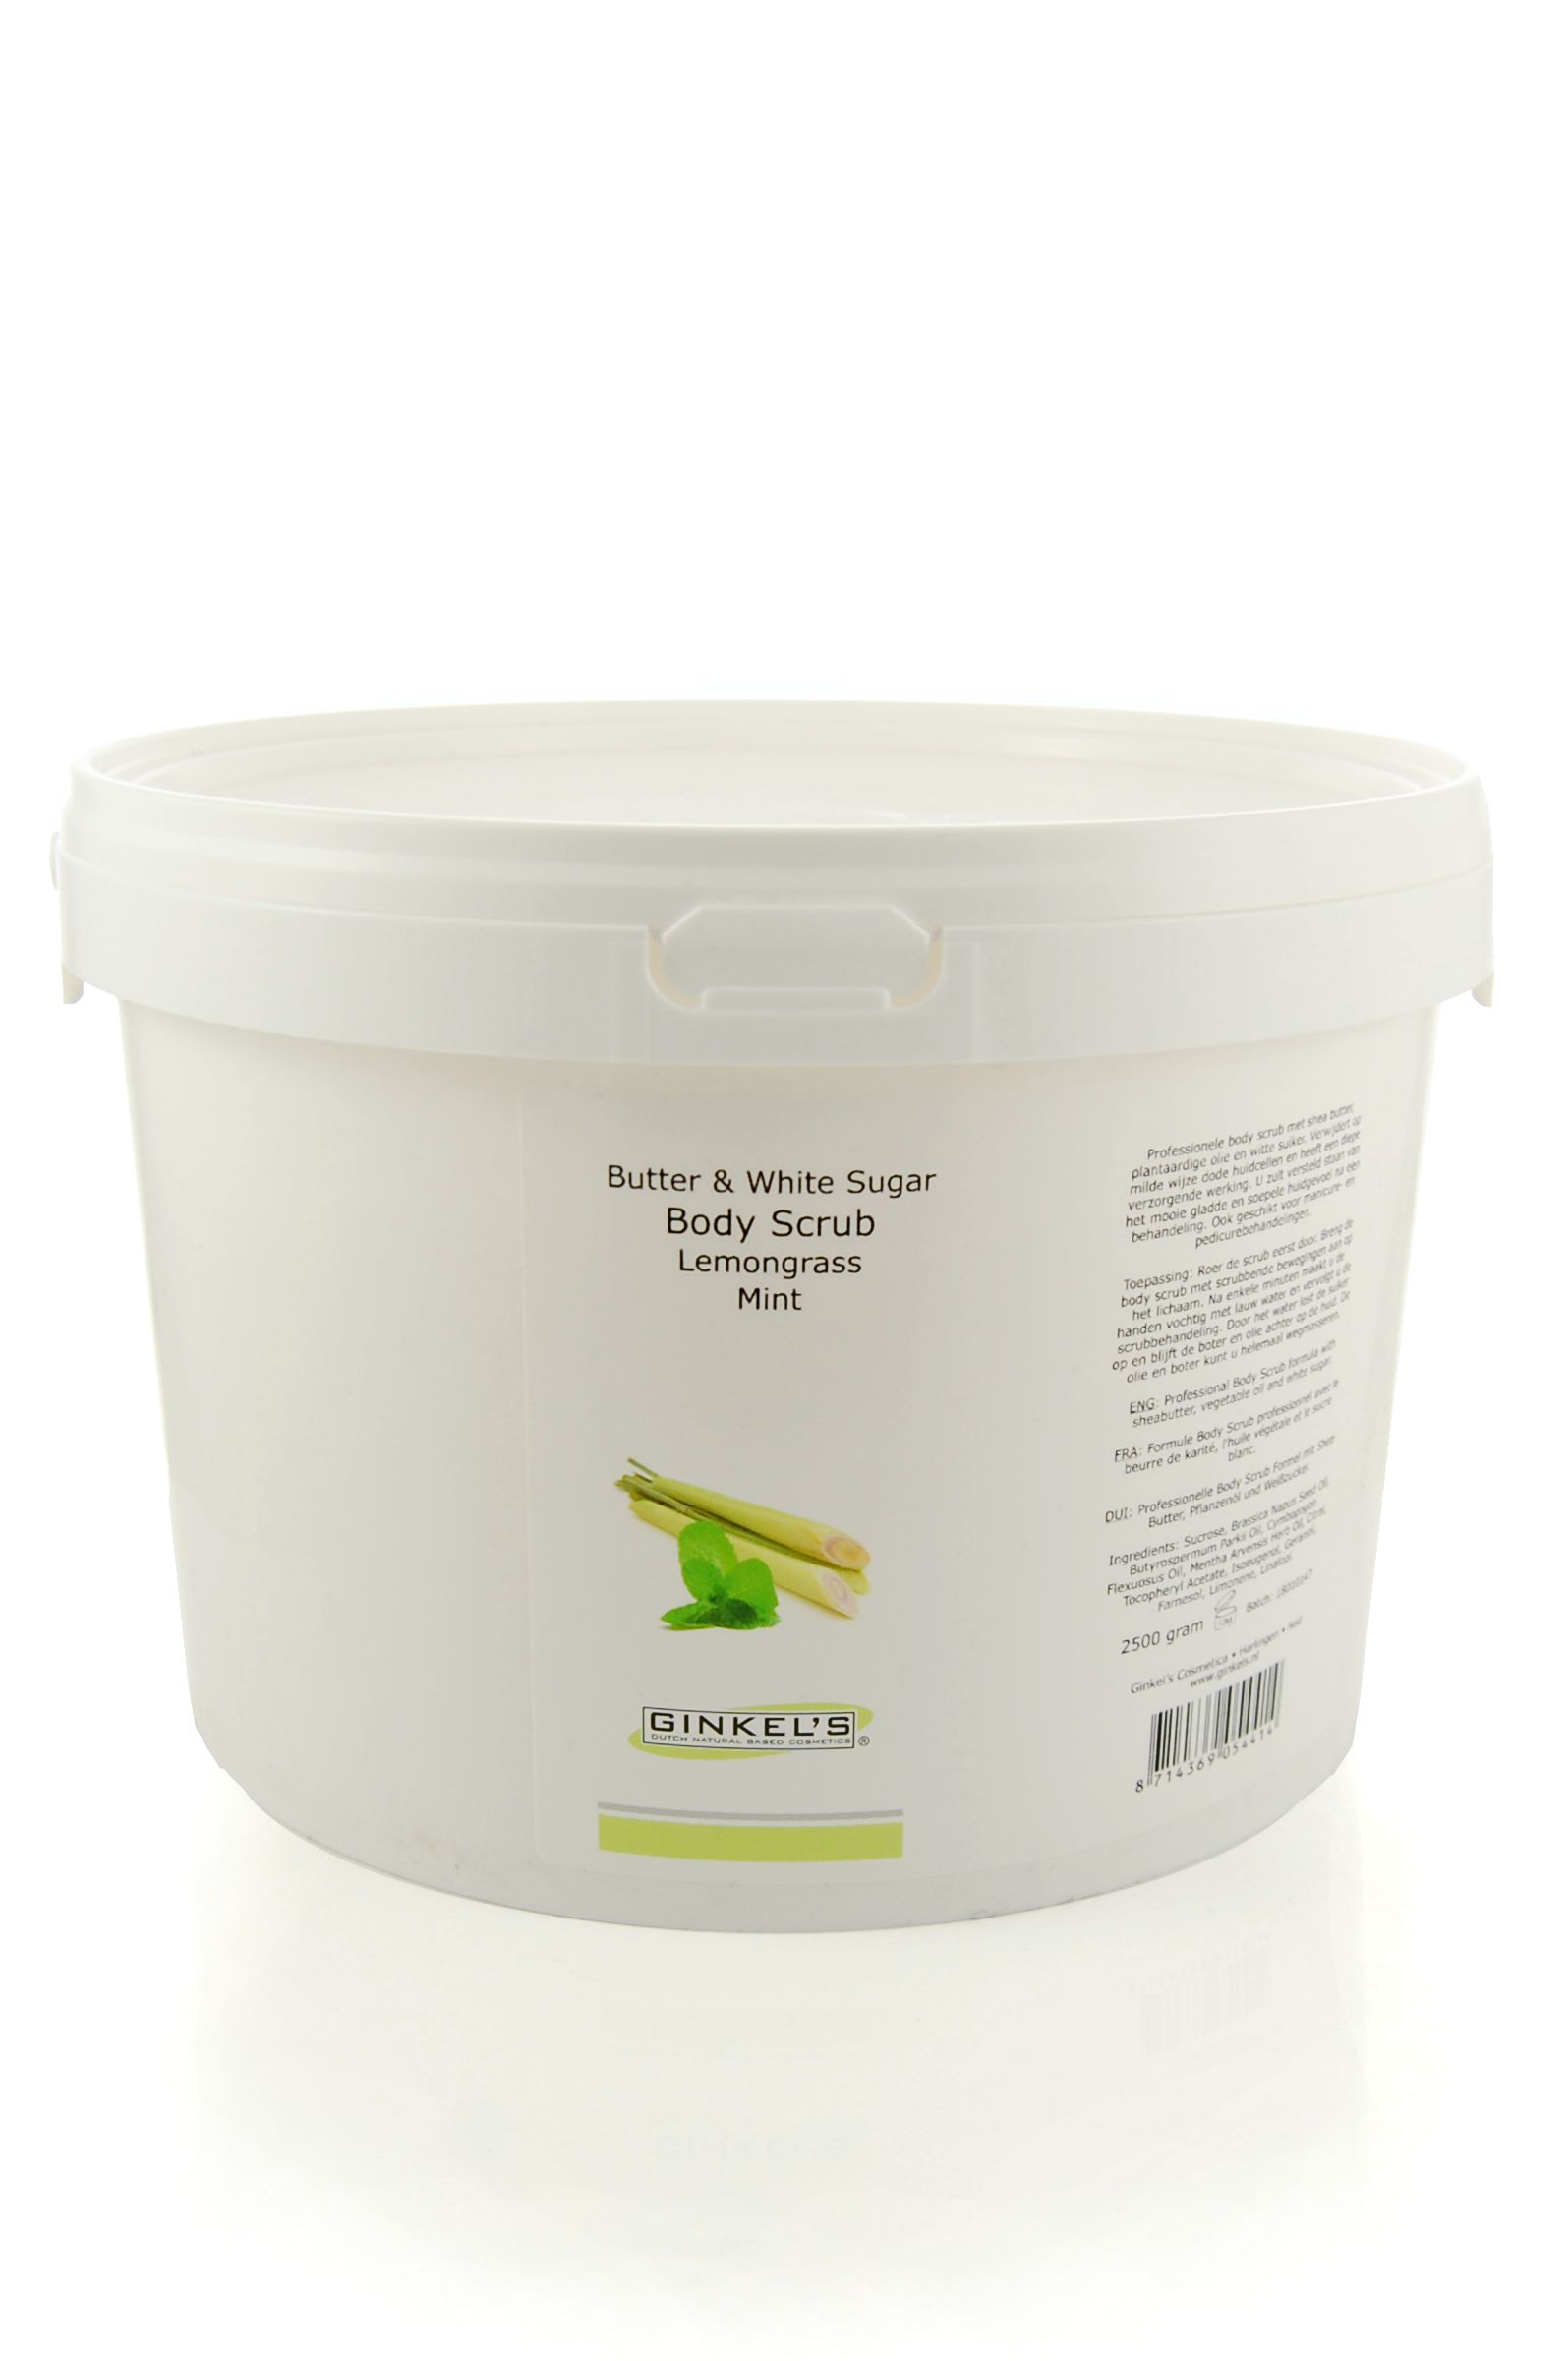 Matrix Ga wandelen Methode Butter & White Sugar Body Scrub - Lemongrass & Mint - 2500 gram - Ginkel's  Cosmetics